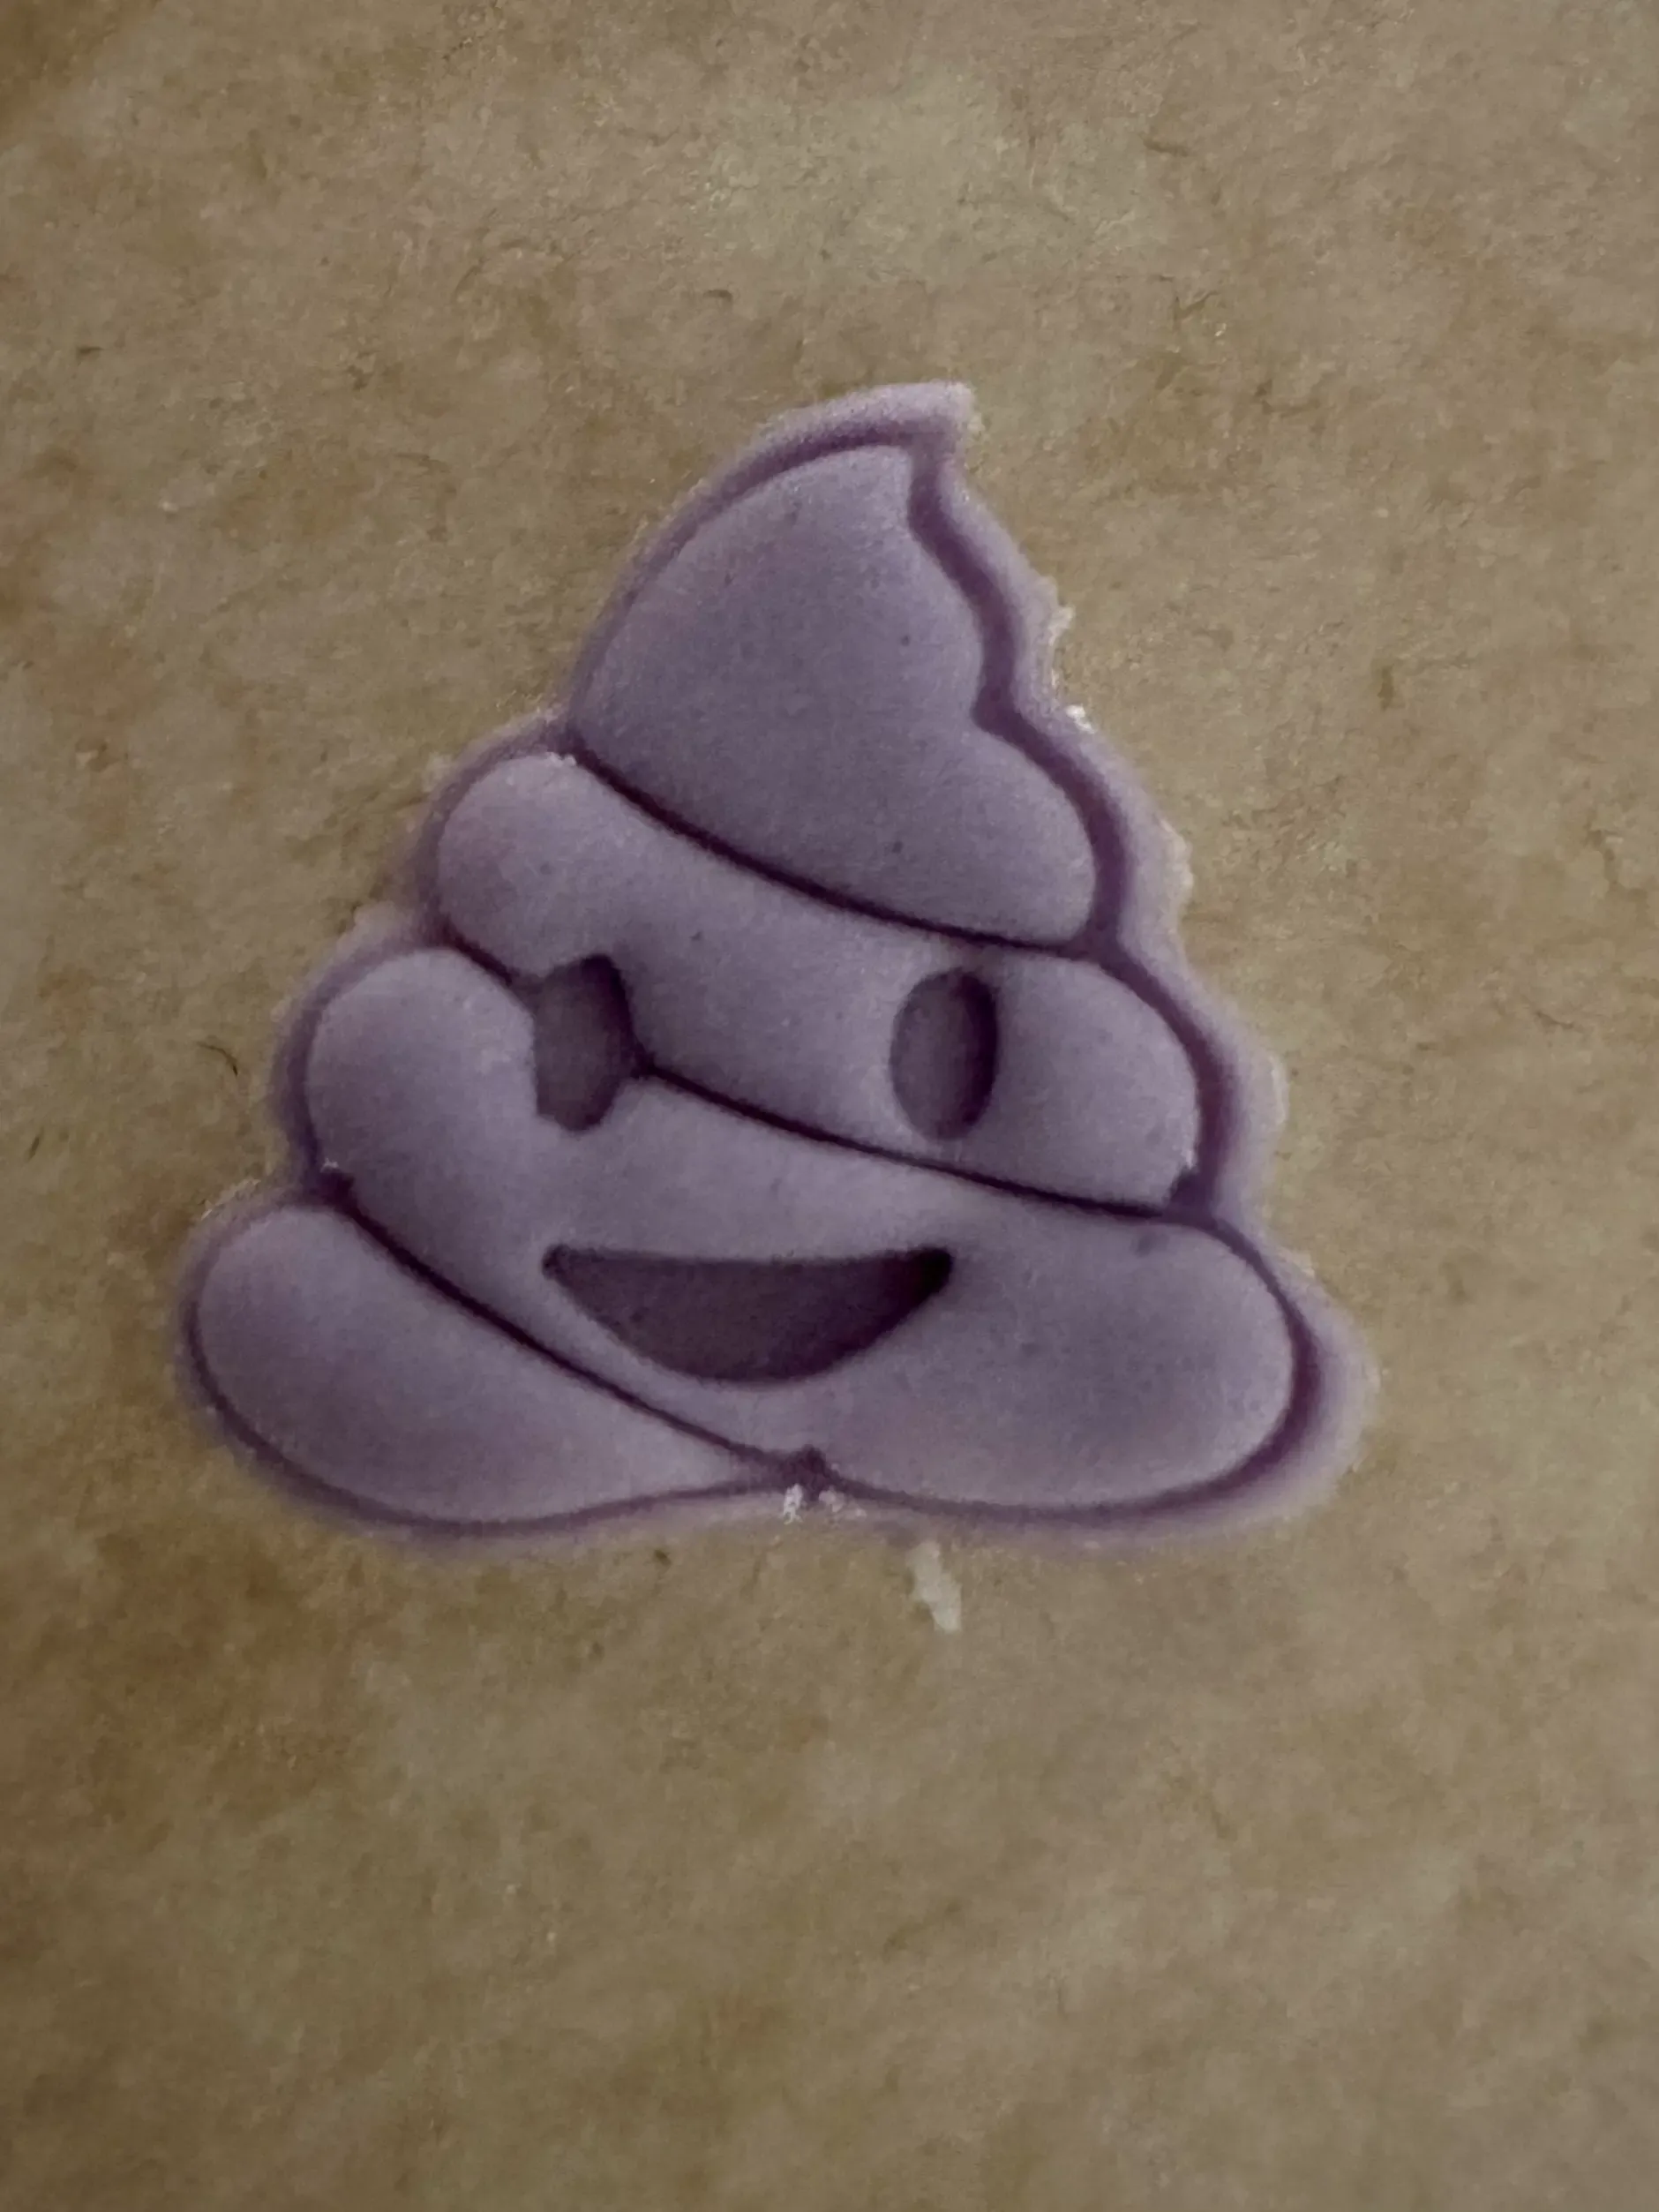 Smiling Poo cookie/sugar paste cutter